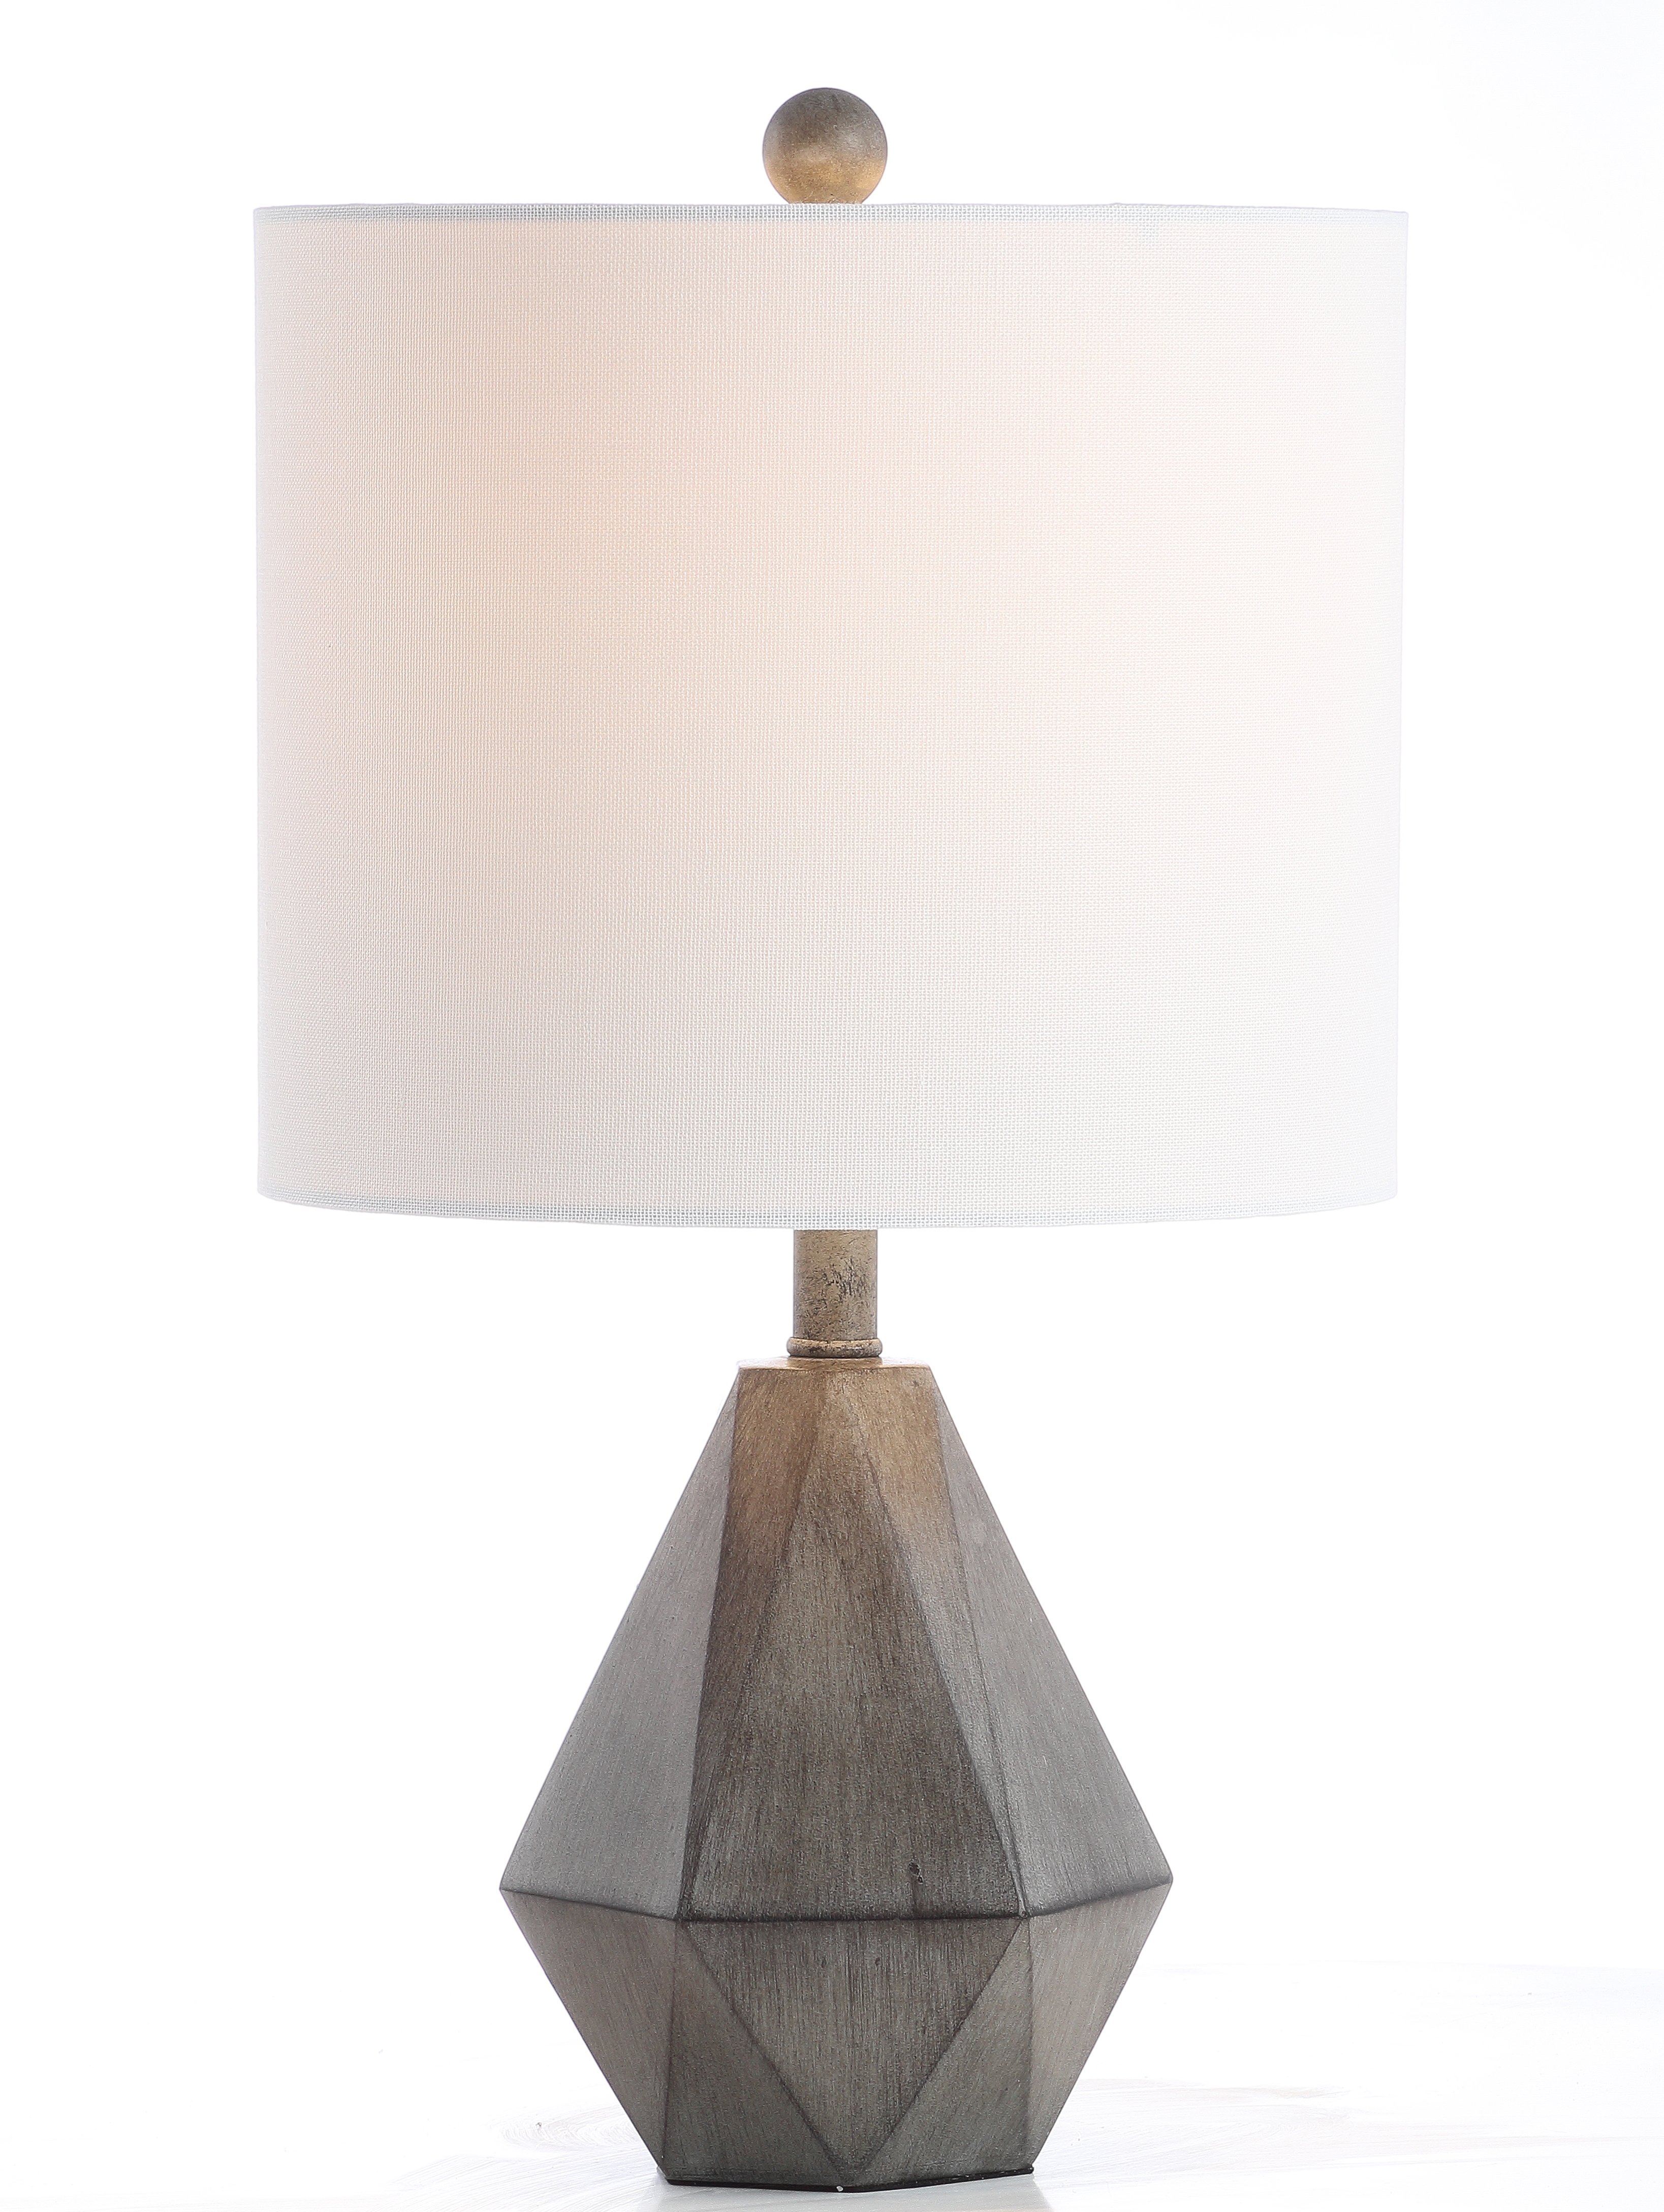 Boras Lamp - Image 3